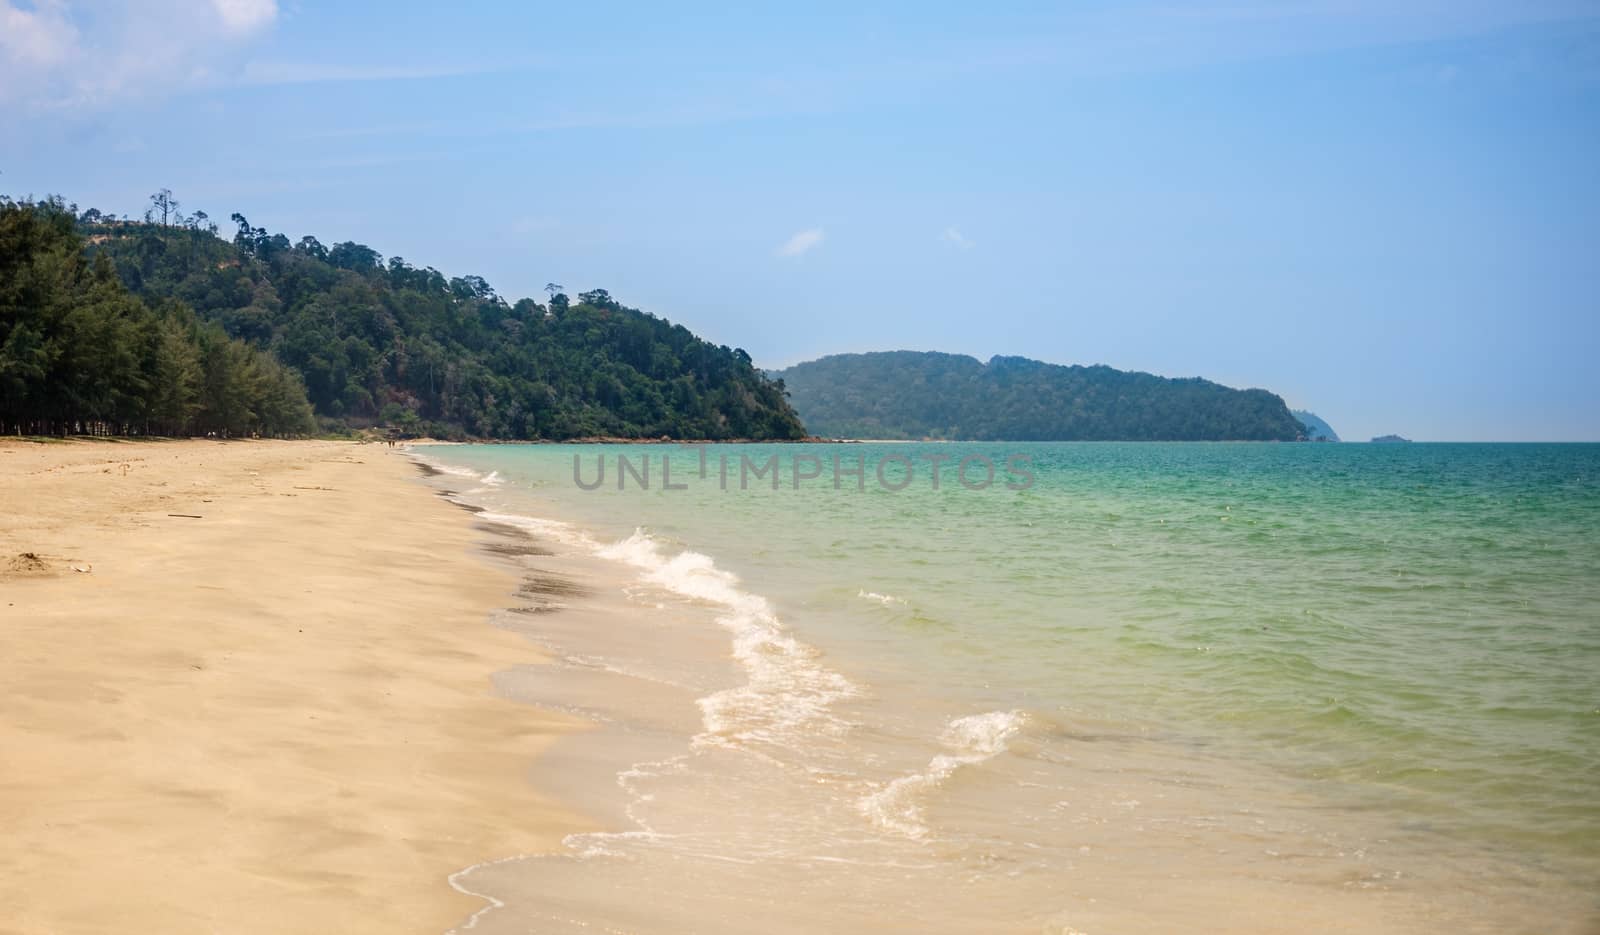 Lonely sandy beach. Green hills, blue sea, white sand by rainfallsup